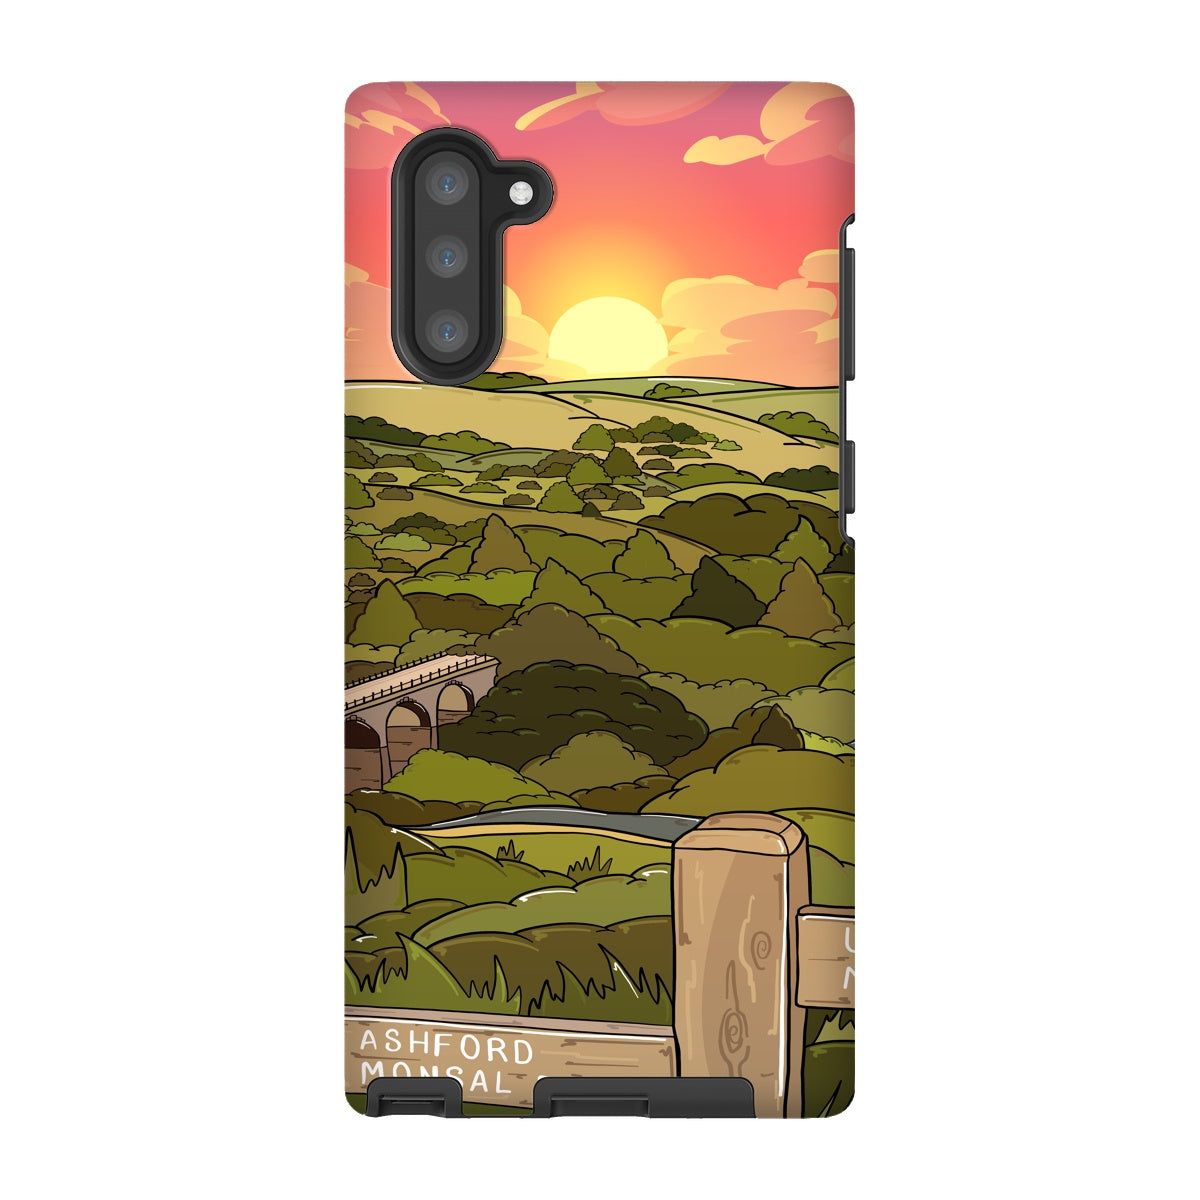 Monsal Head - Into the sunset Tough Phone Case